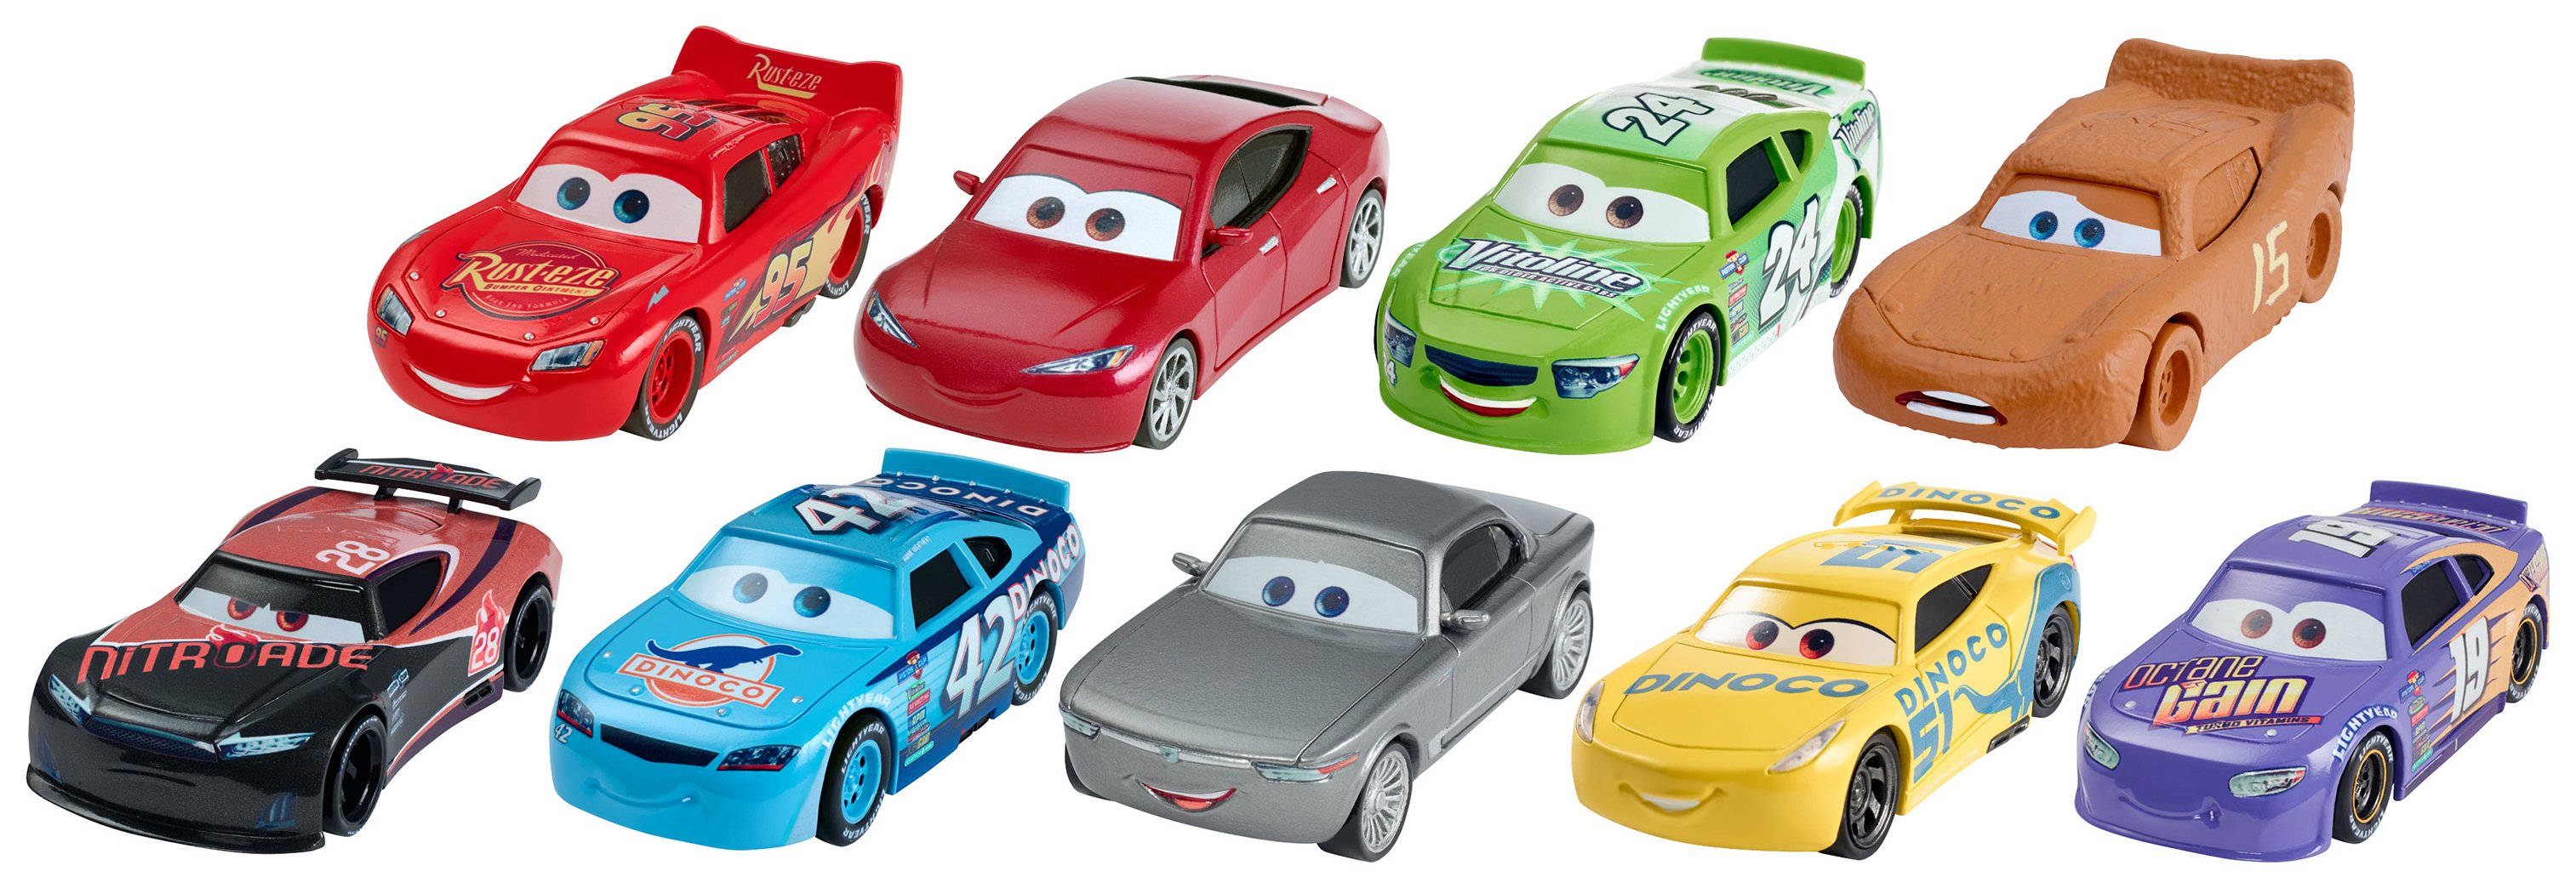 disney cars toys argos